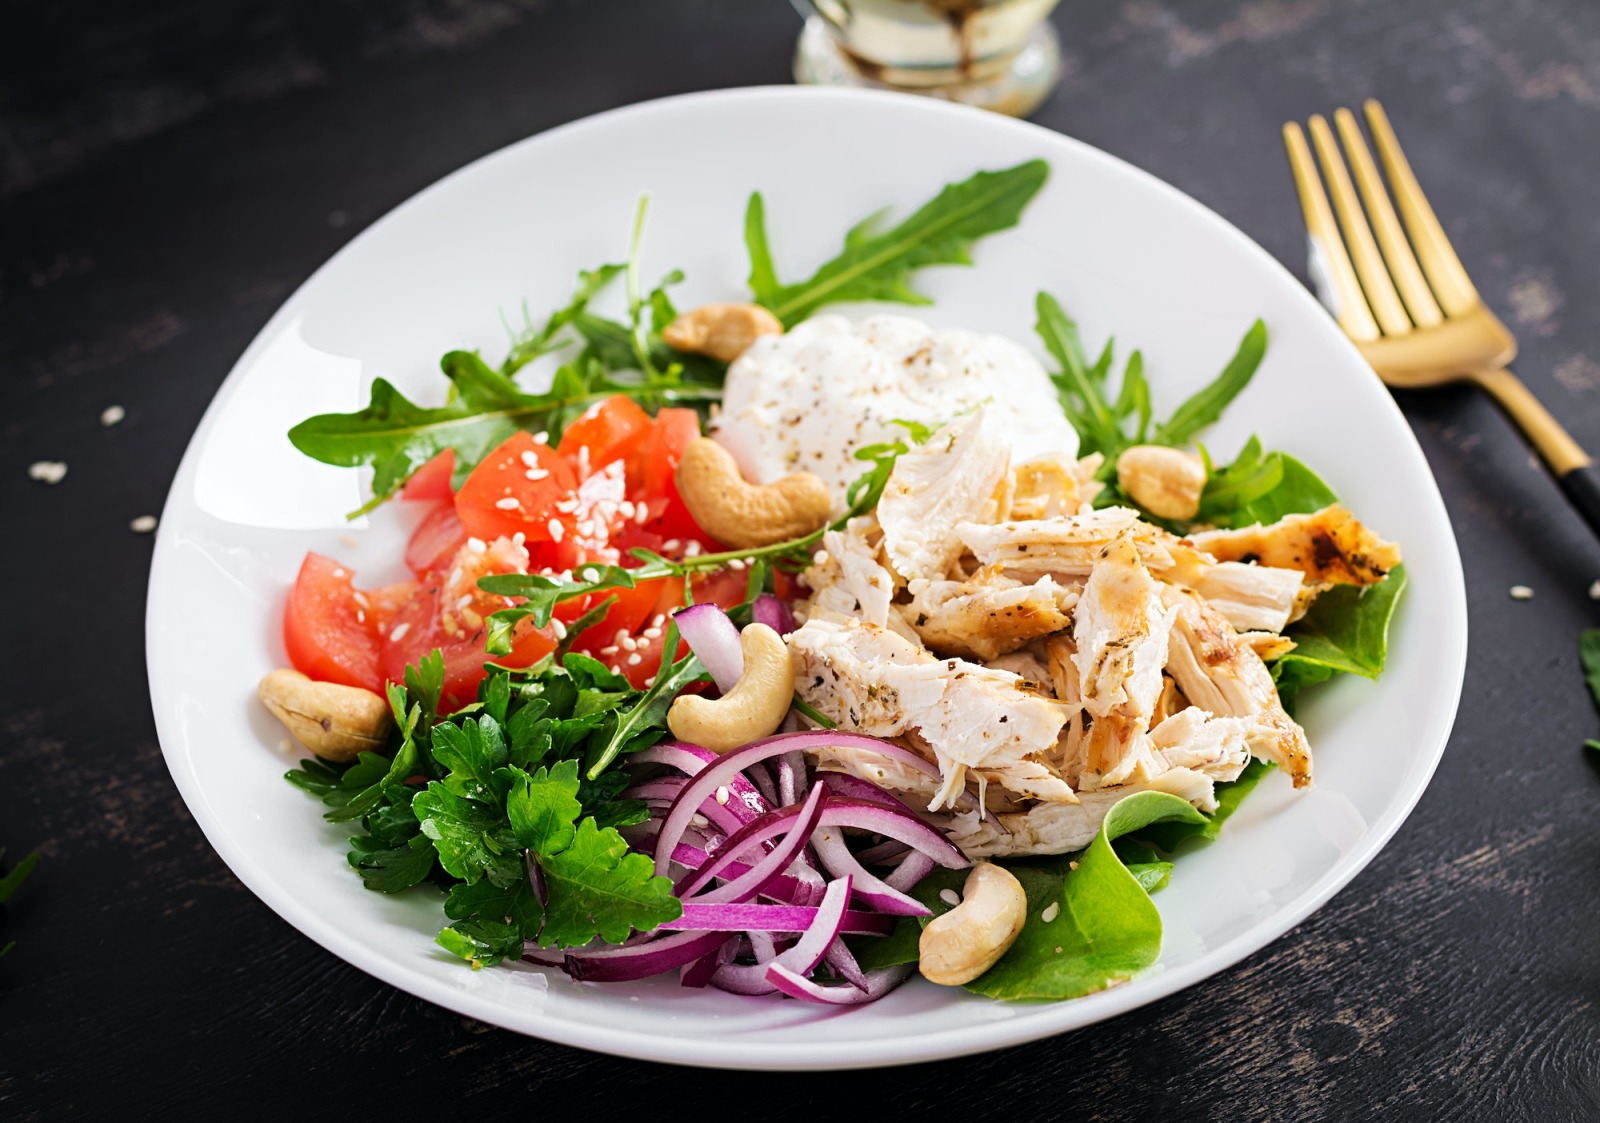 Healthy vegetable summer salad, fresh vegetables and chicken breast